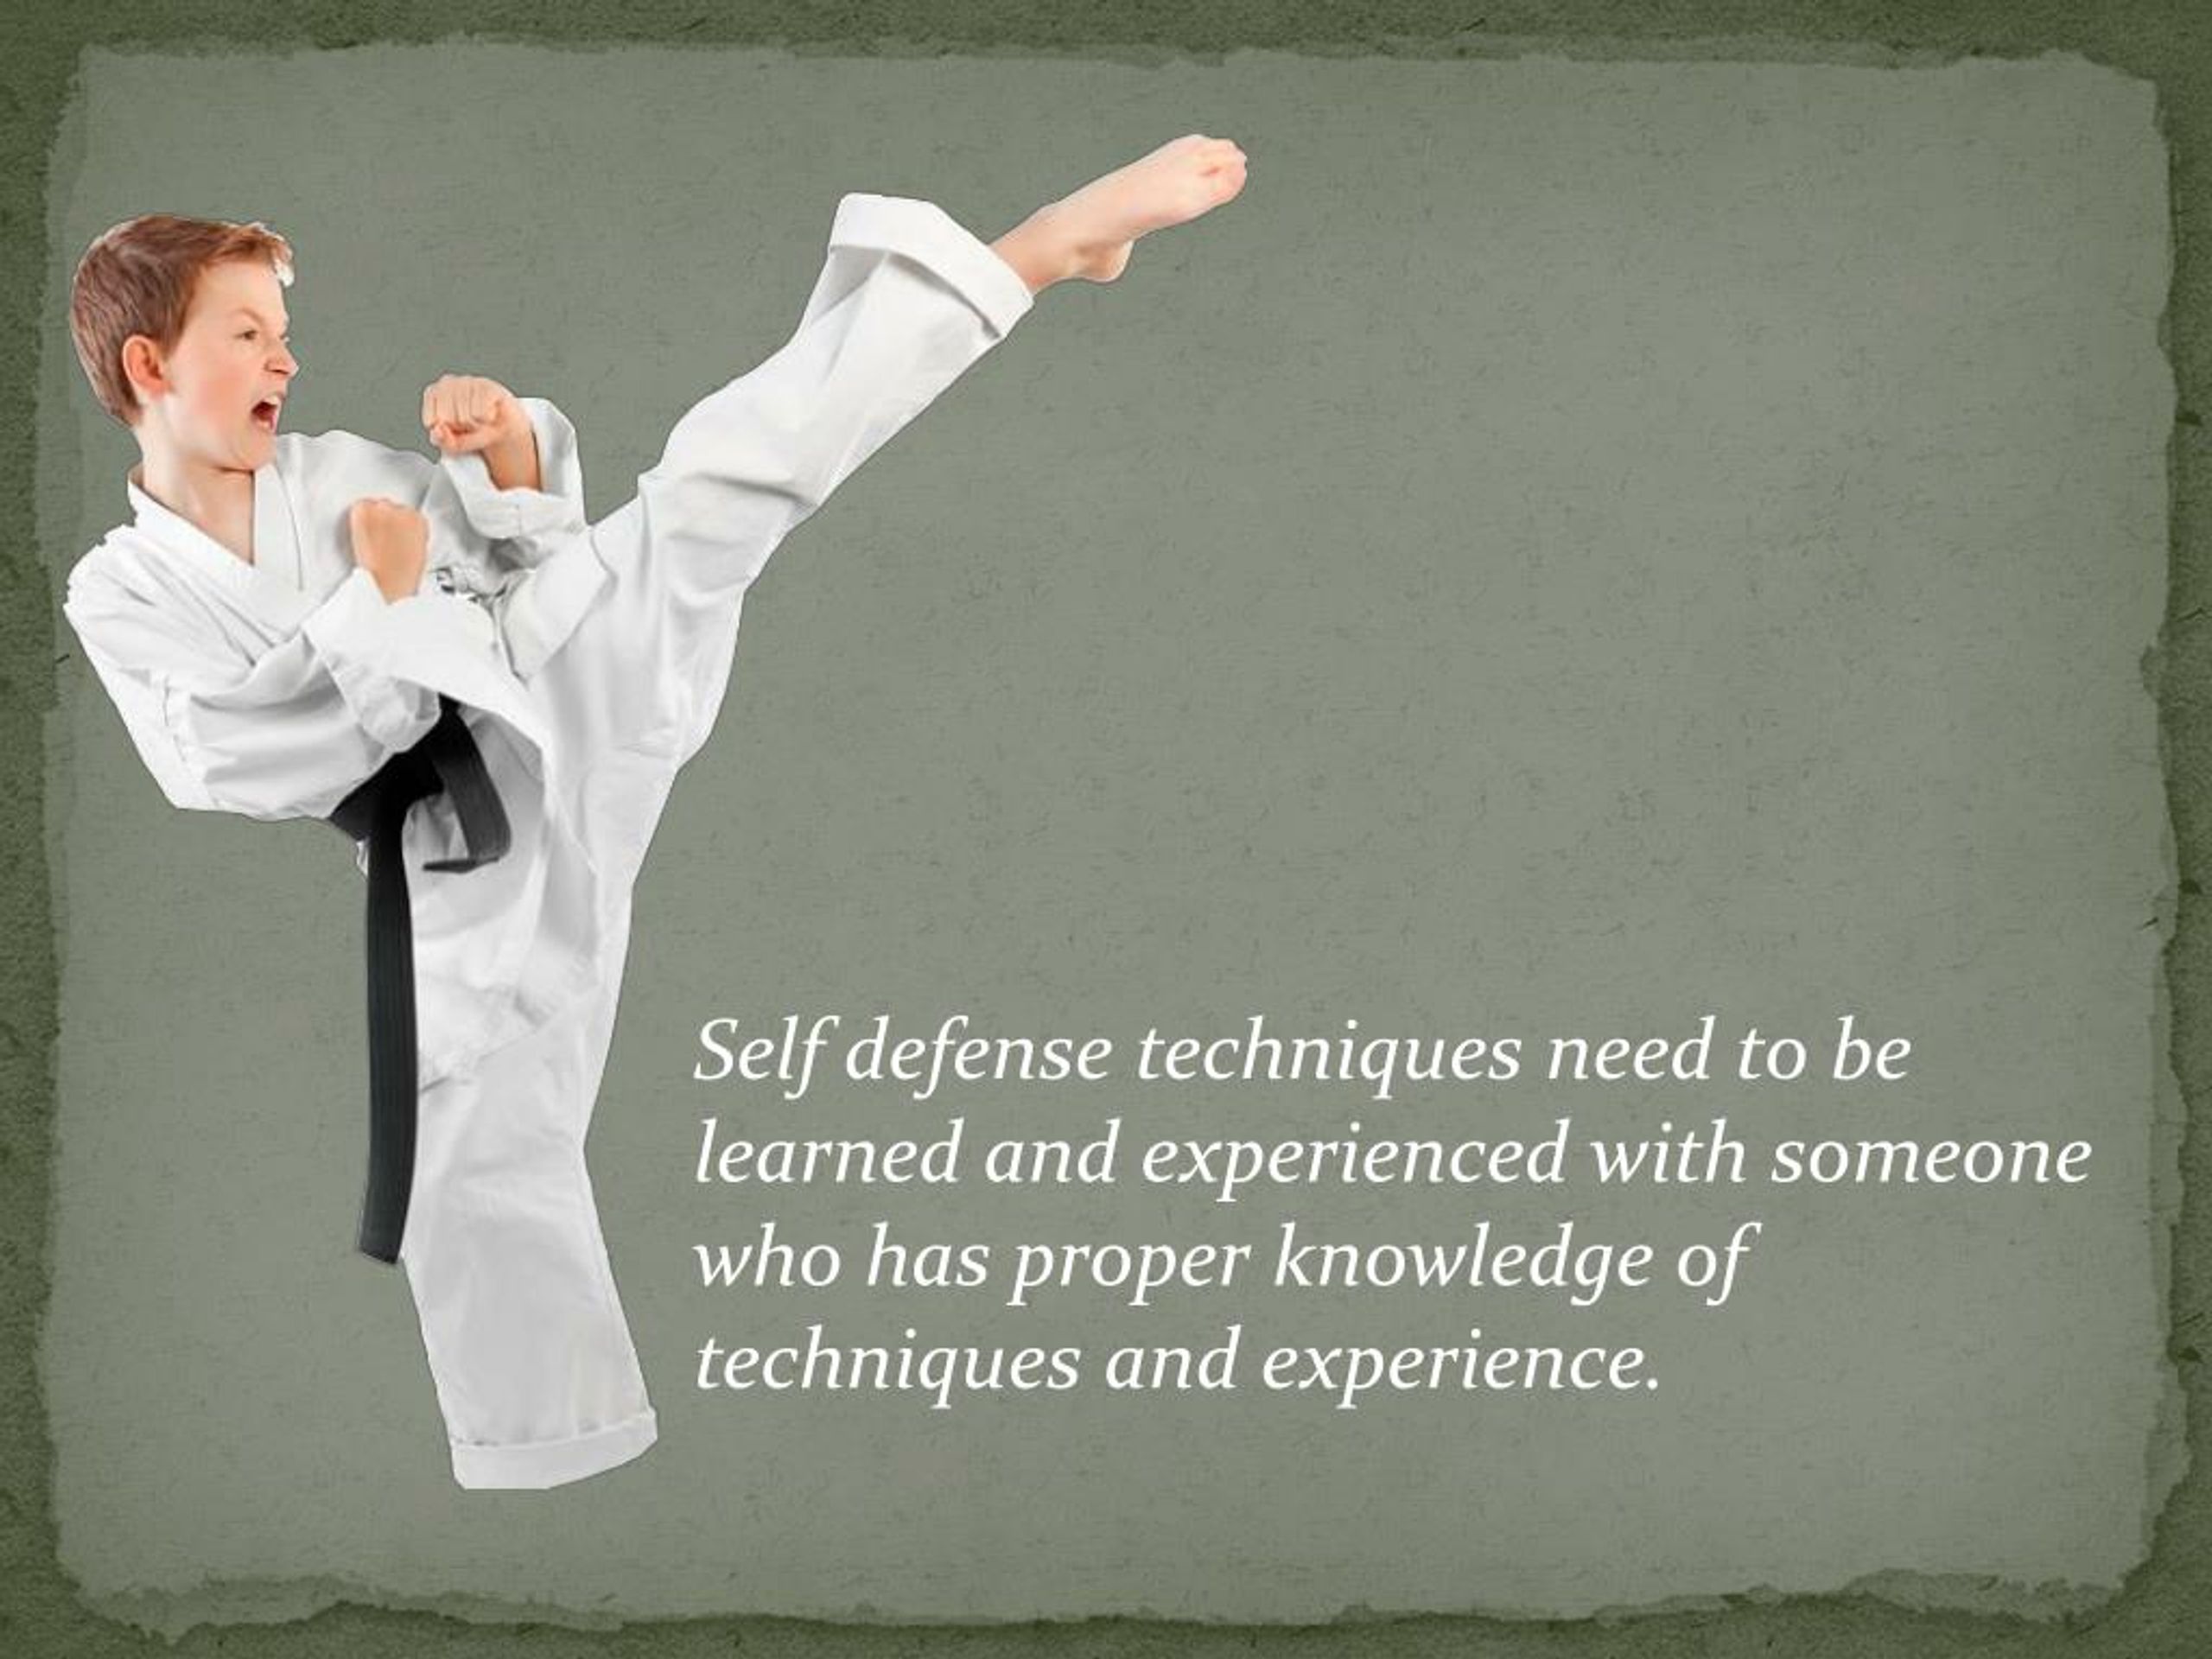 powerpoint presentation on self defense